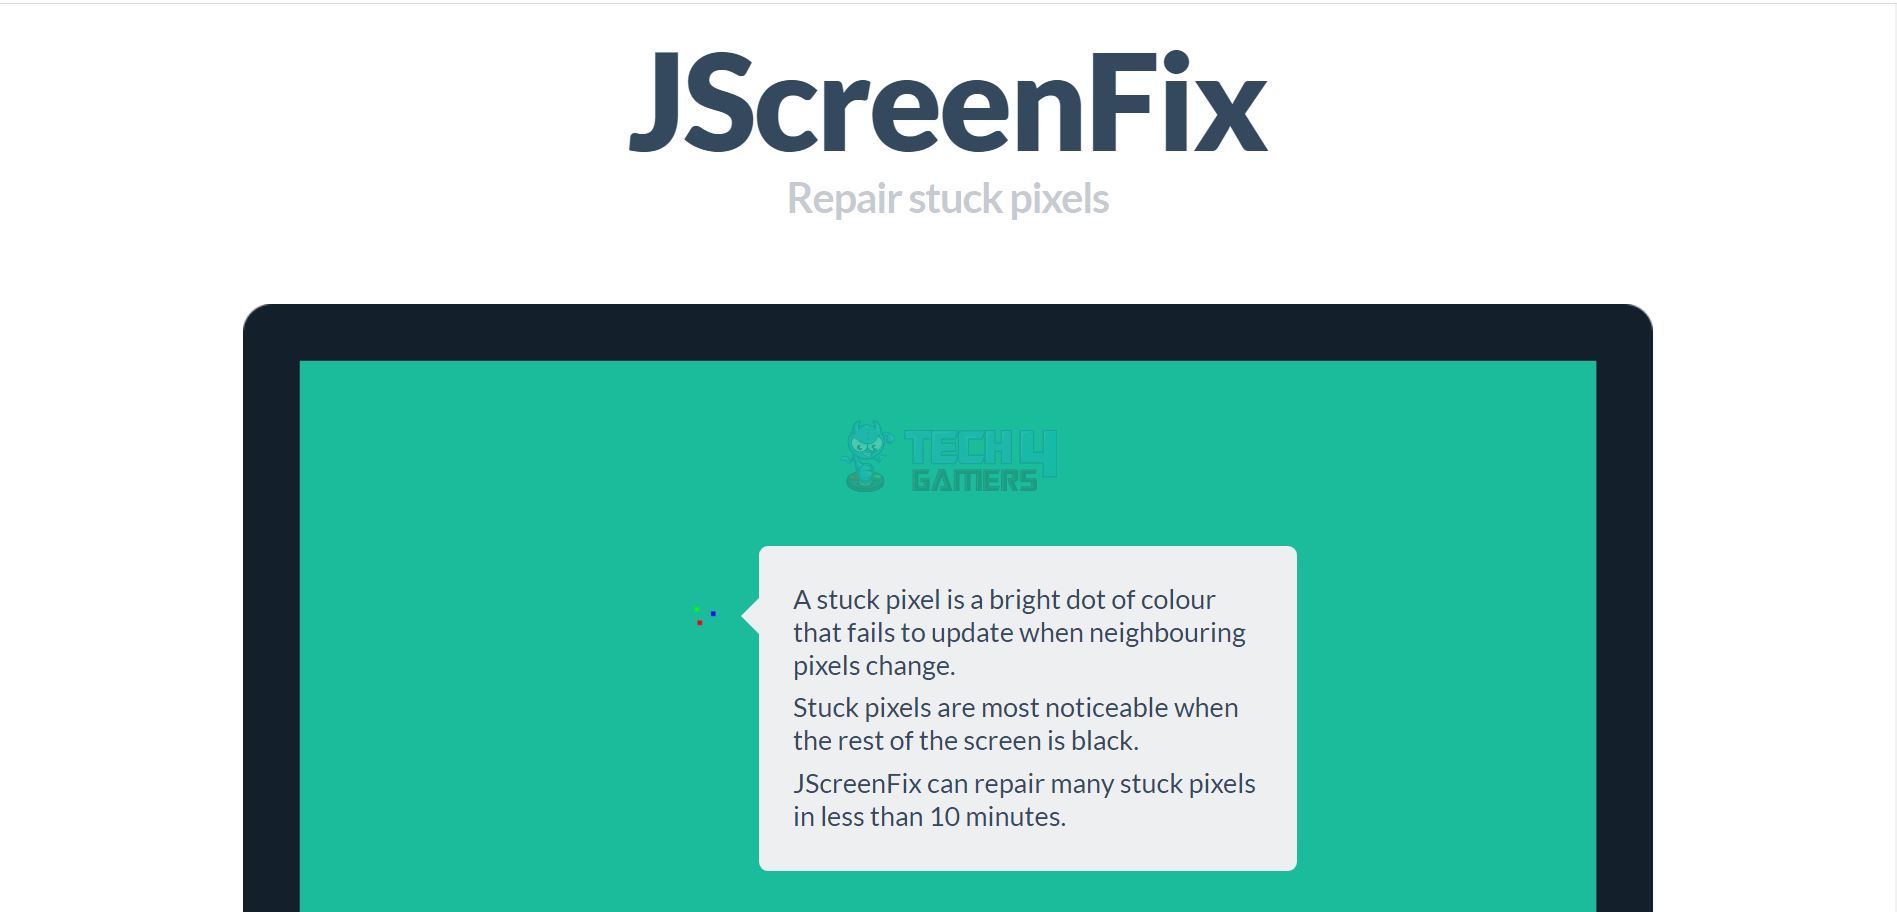 JScreenFix